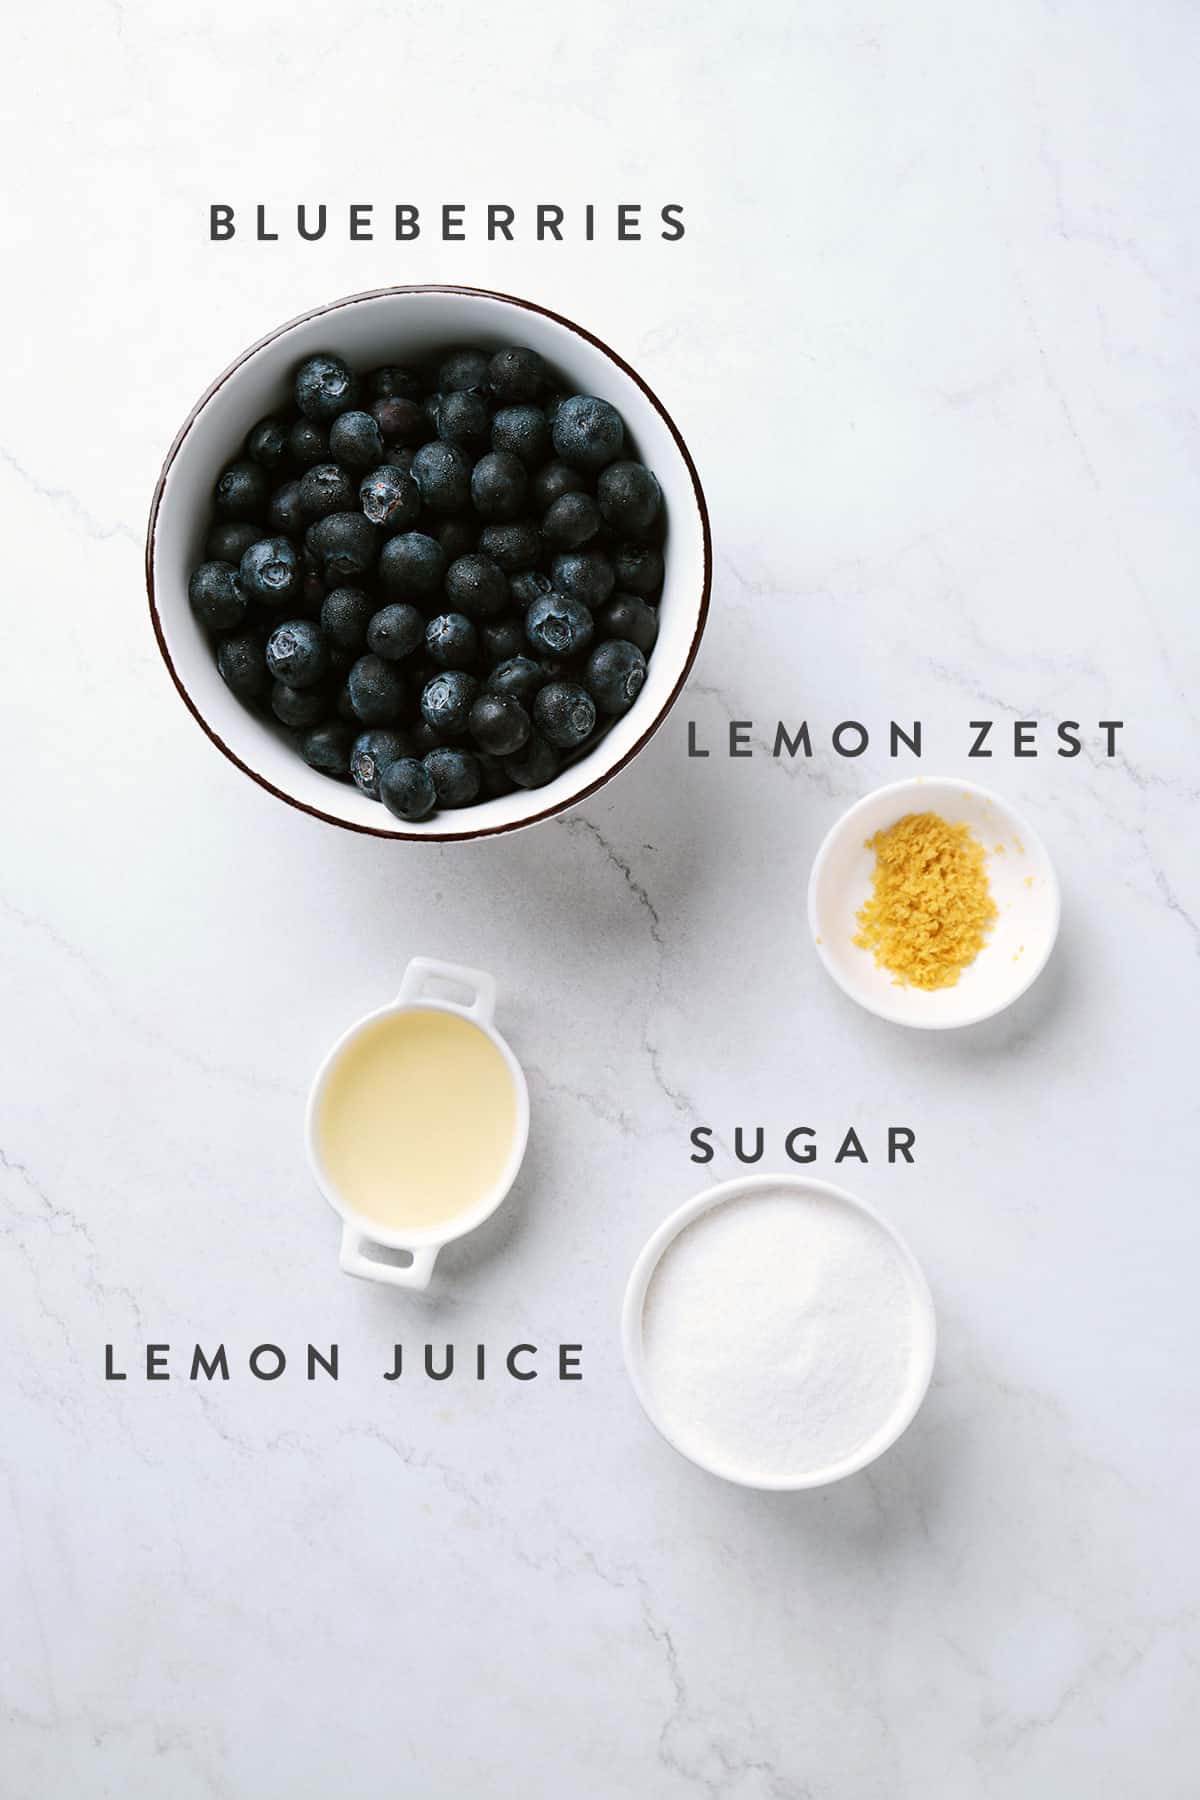 ingredients to make refrigerator blueberry jam include blueberries, sugar, and lemon juice.